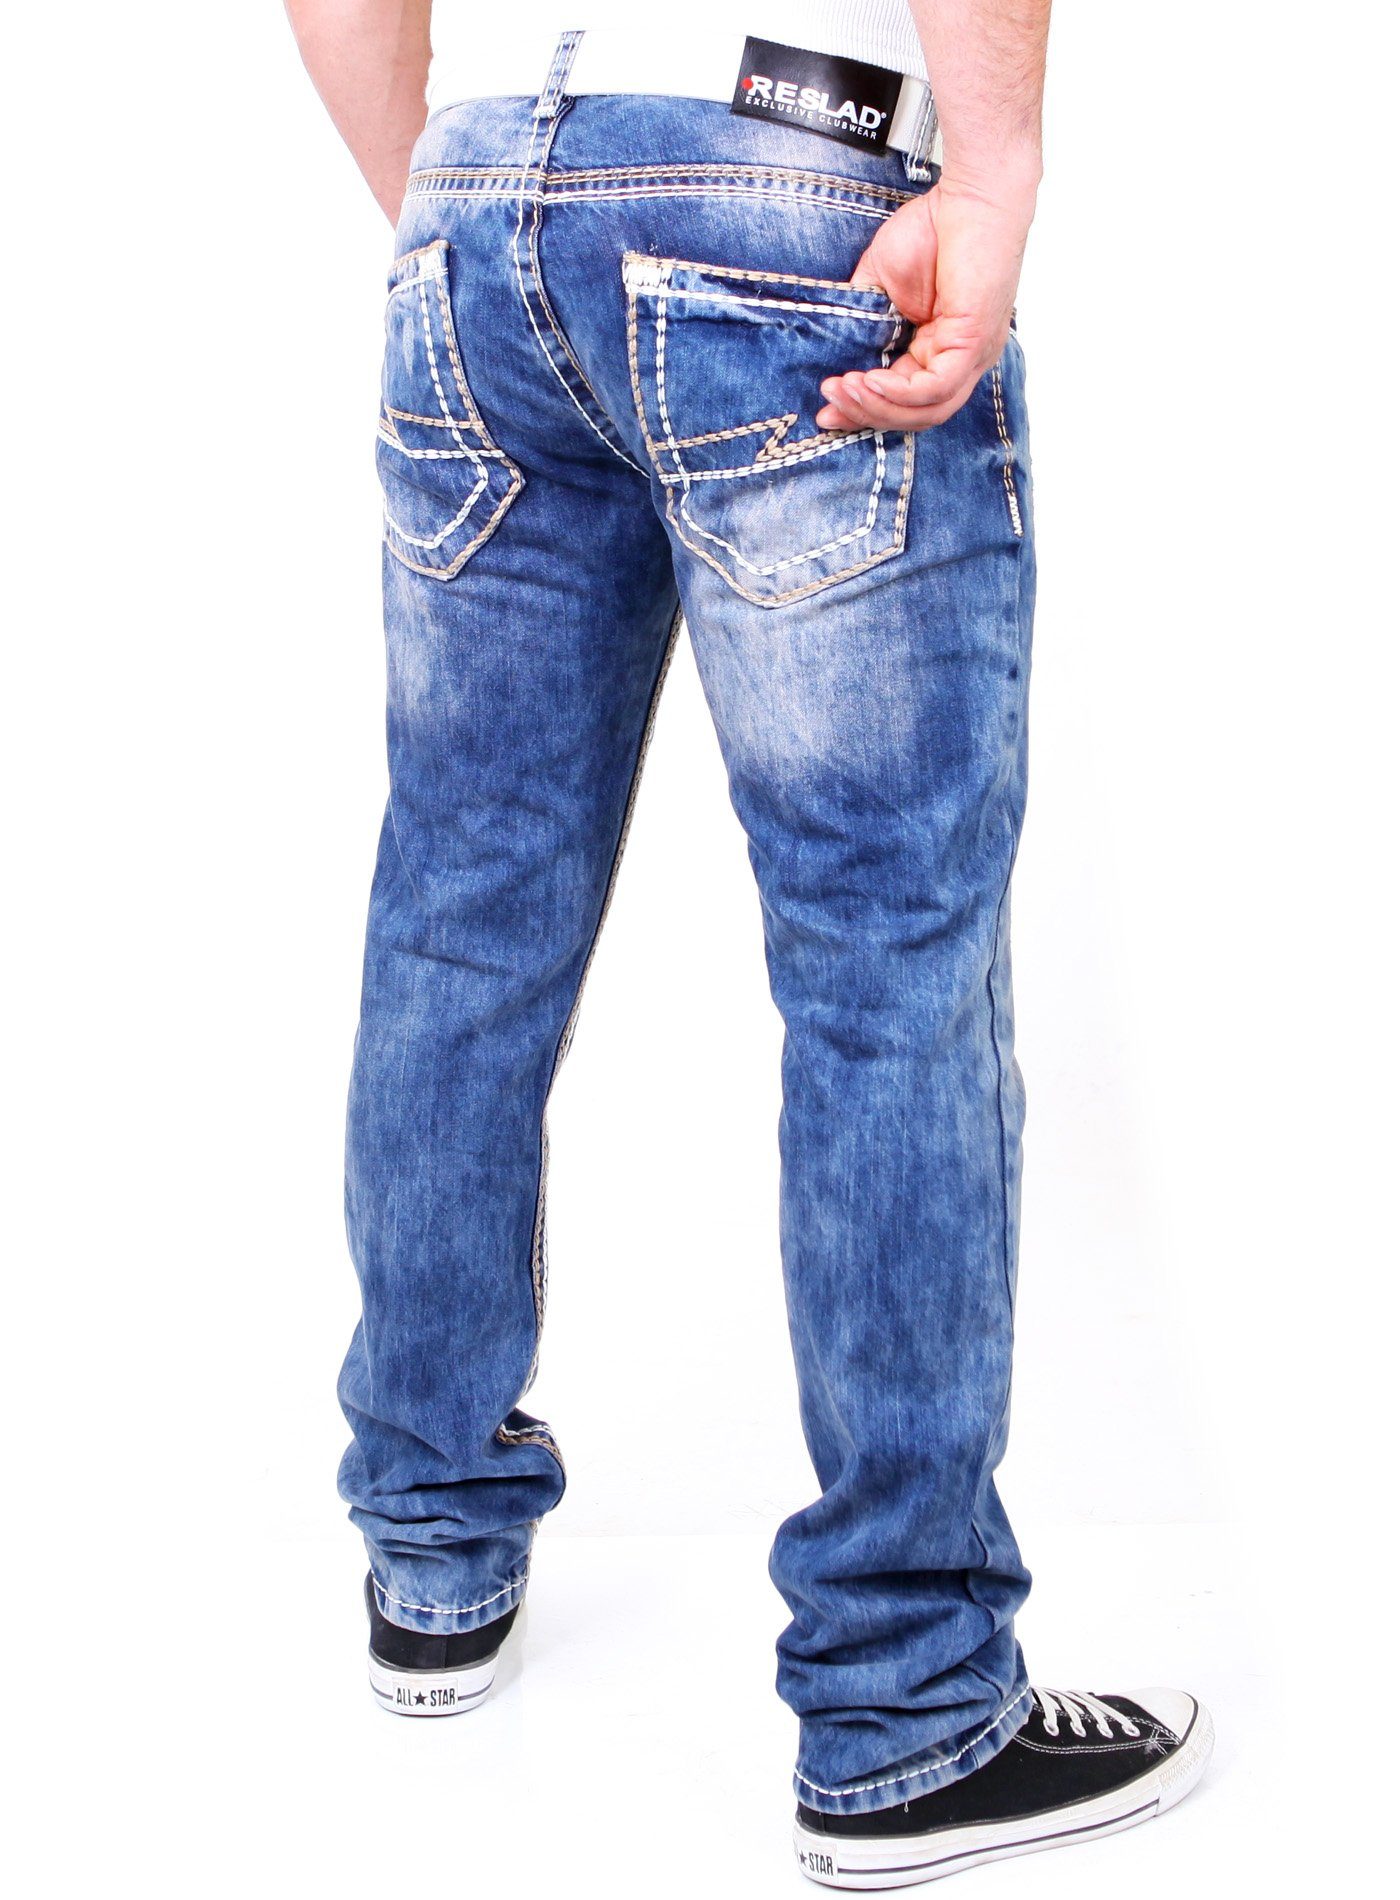 Reslad Herren Jeans Straight Cut Dicke Naht Vintage Look Jeanshose RS-310 Neu 